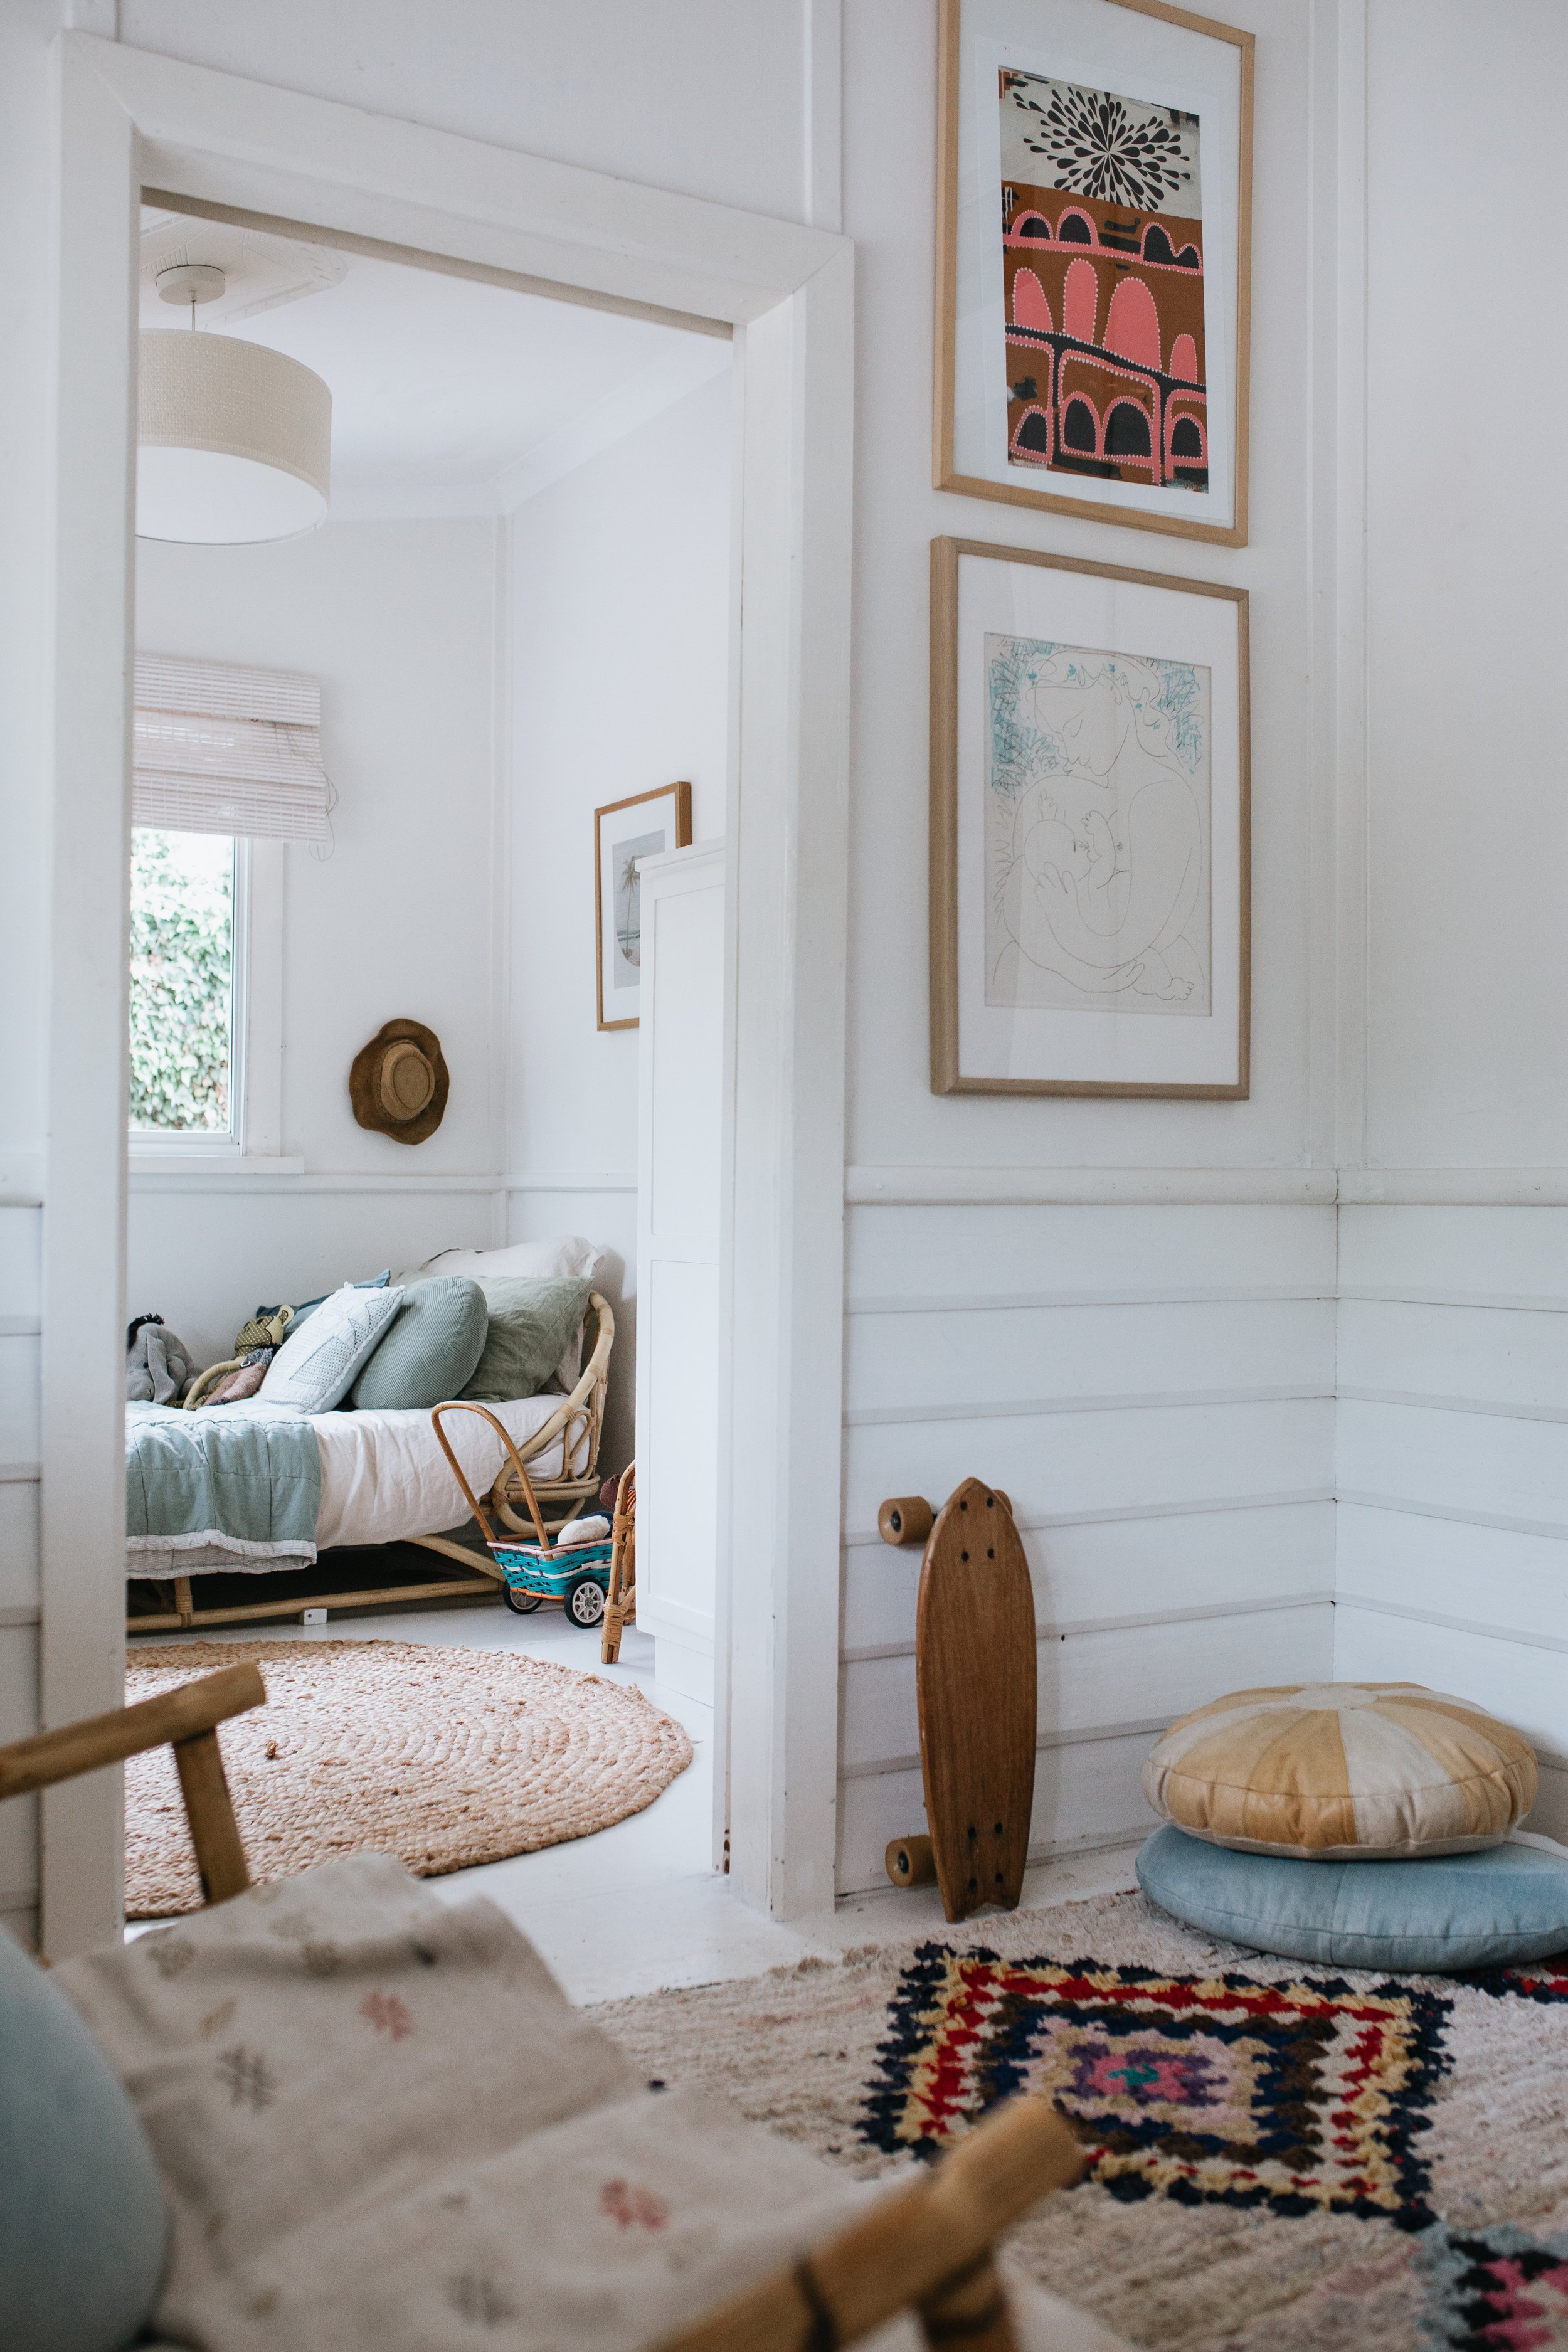 Homespun style interior looking through doorway to child's bedroom